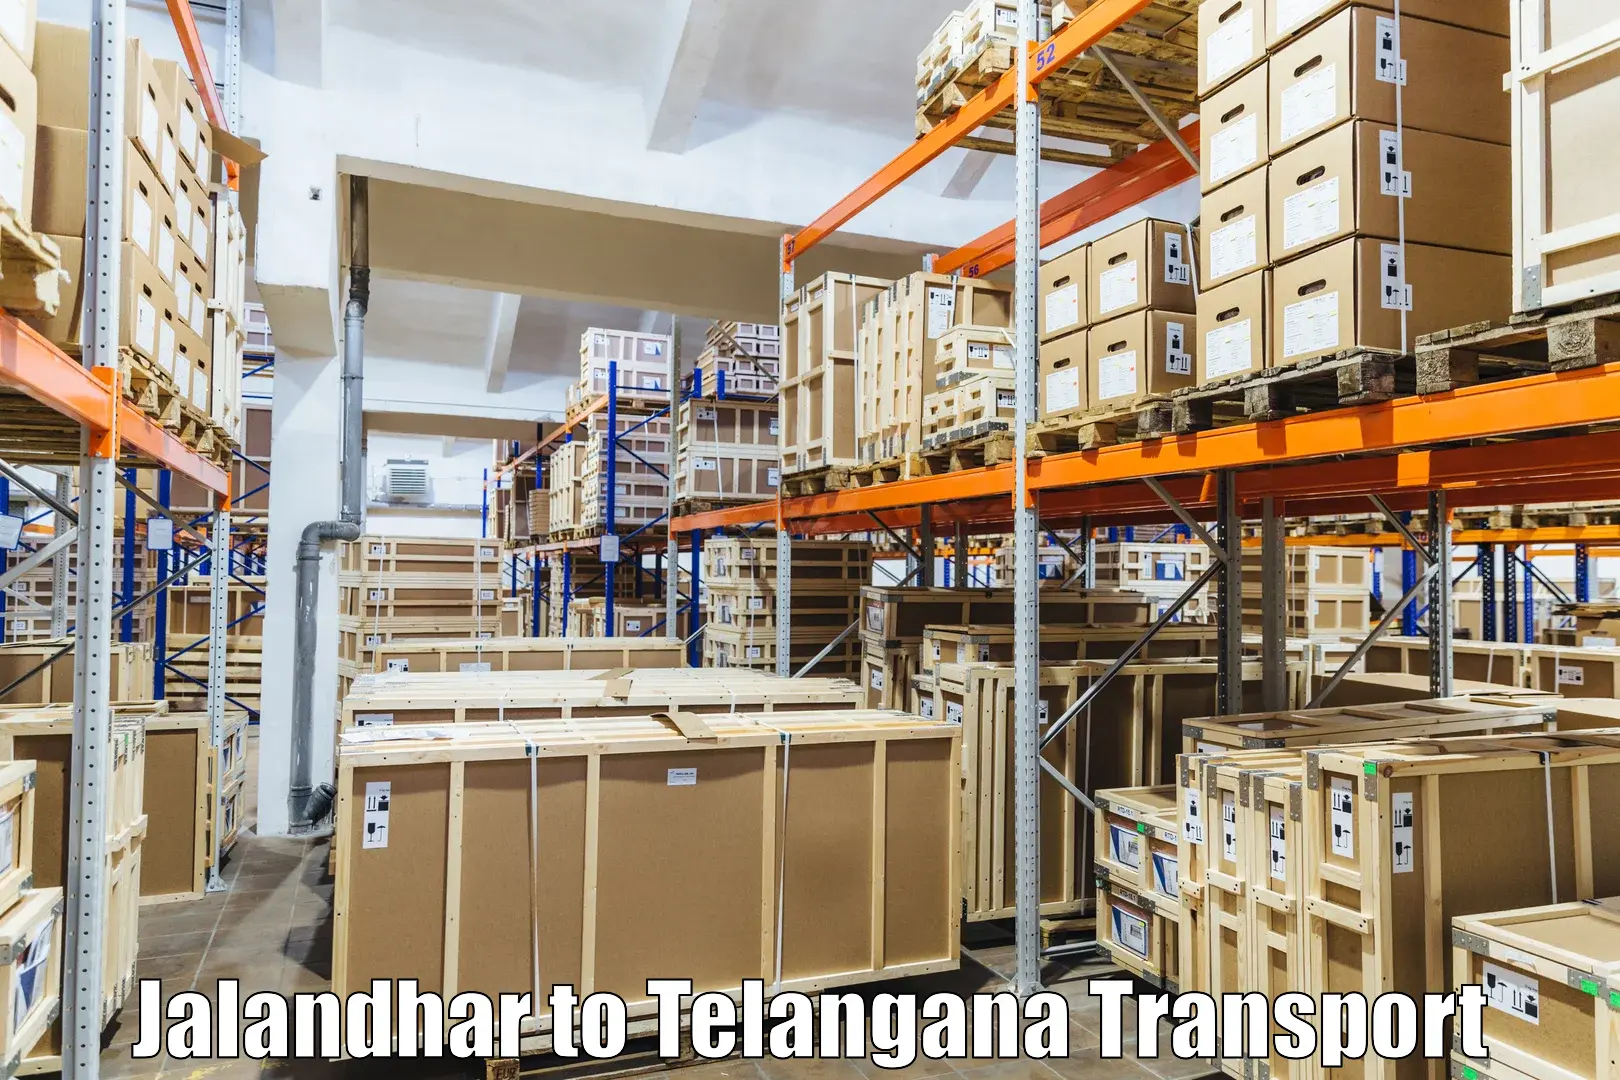 Transport in sharing Jalandhar to Dornakal